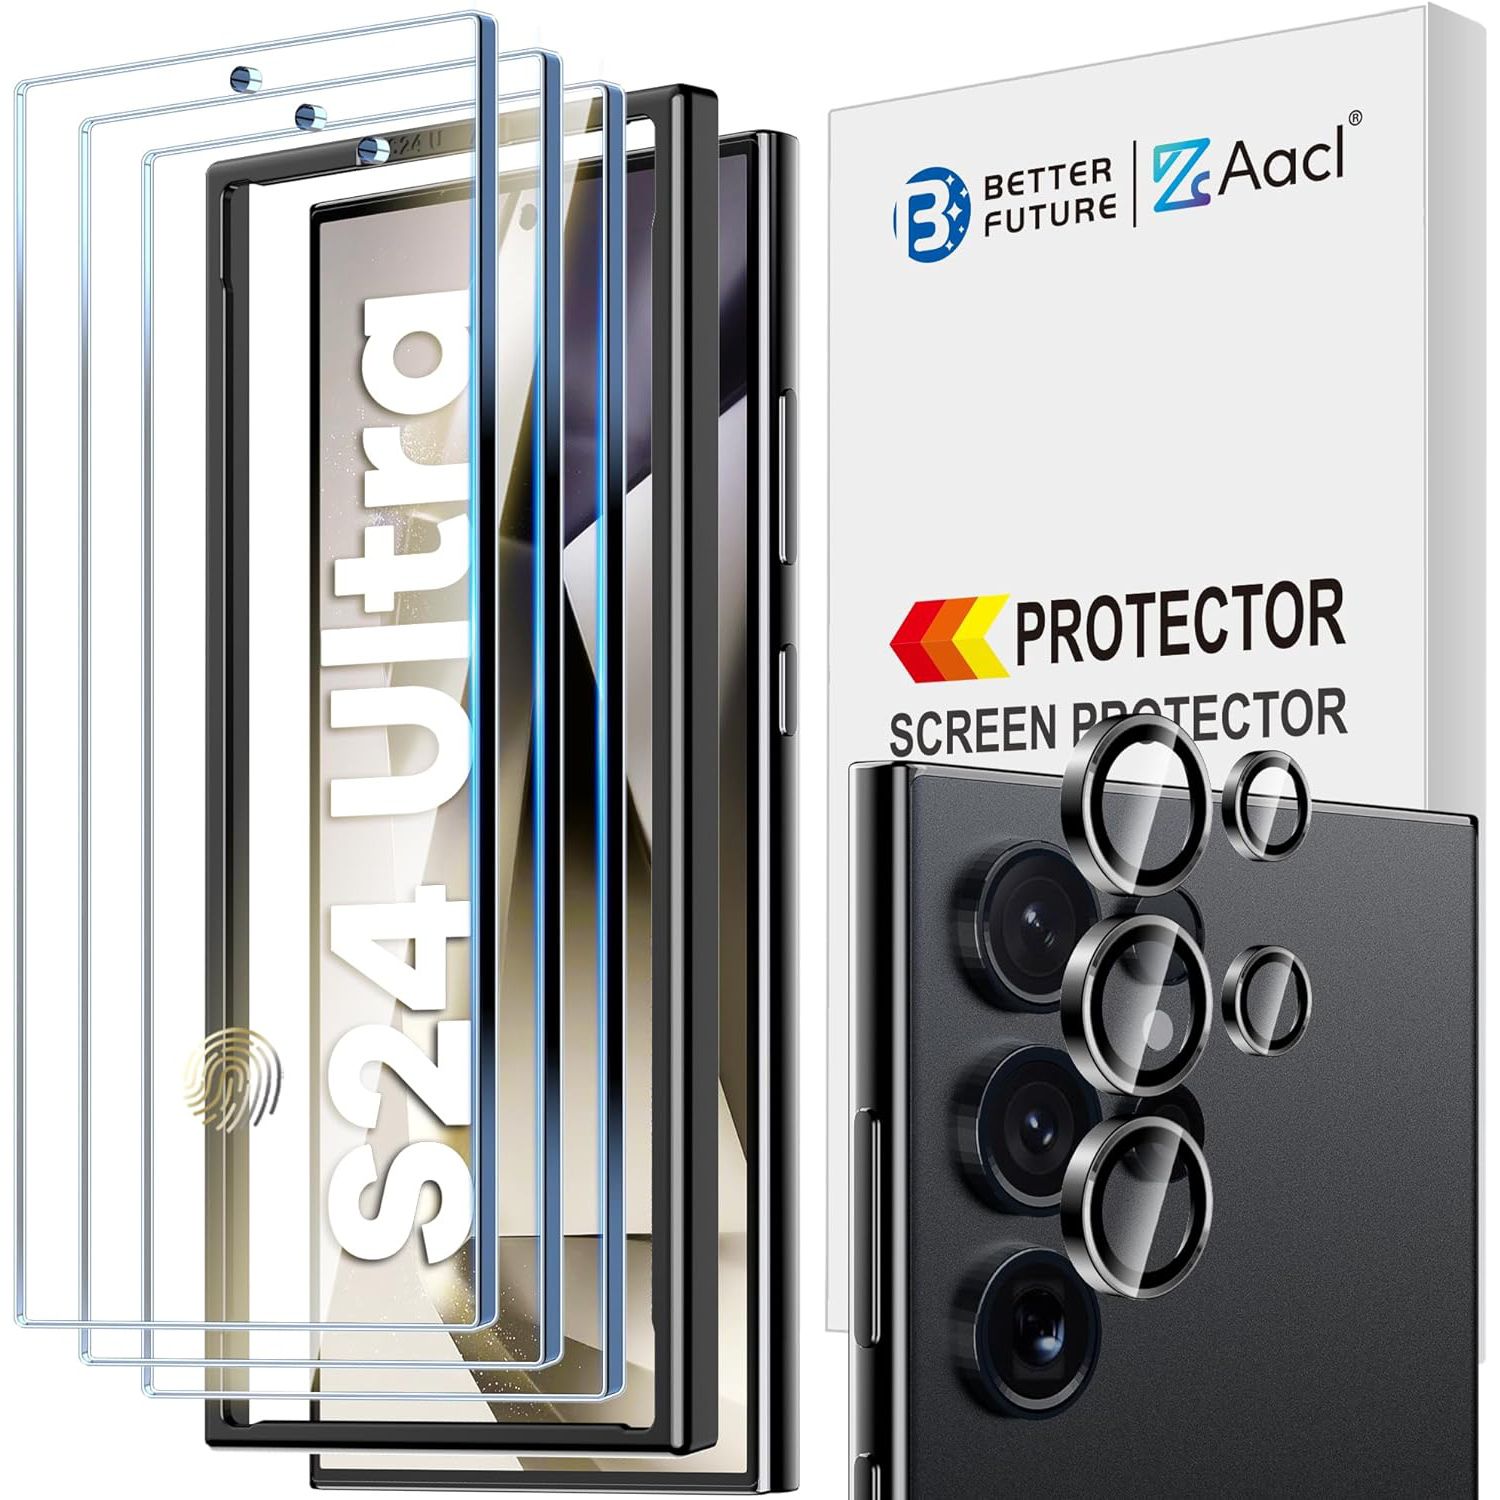 PanzerGlass Ultra-Wide Samsung S24 Ultra Screenprotector Privacy